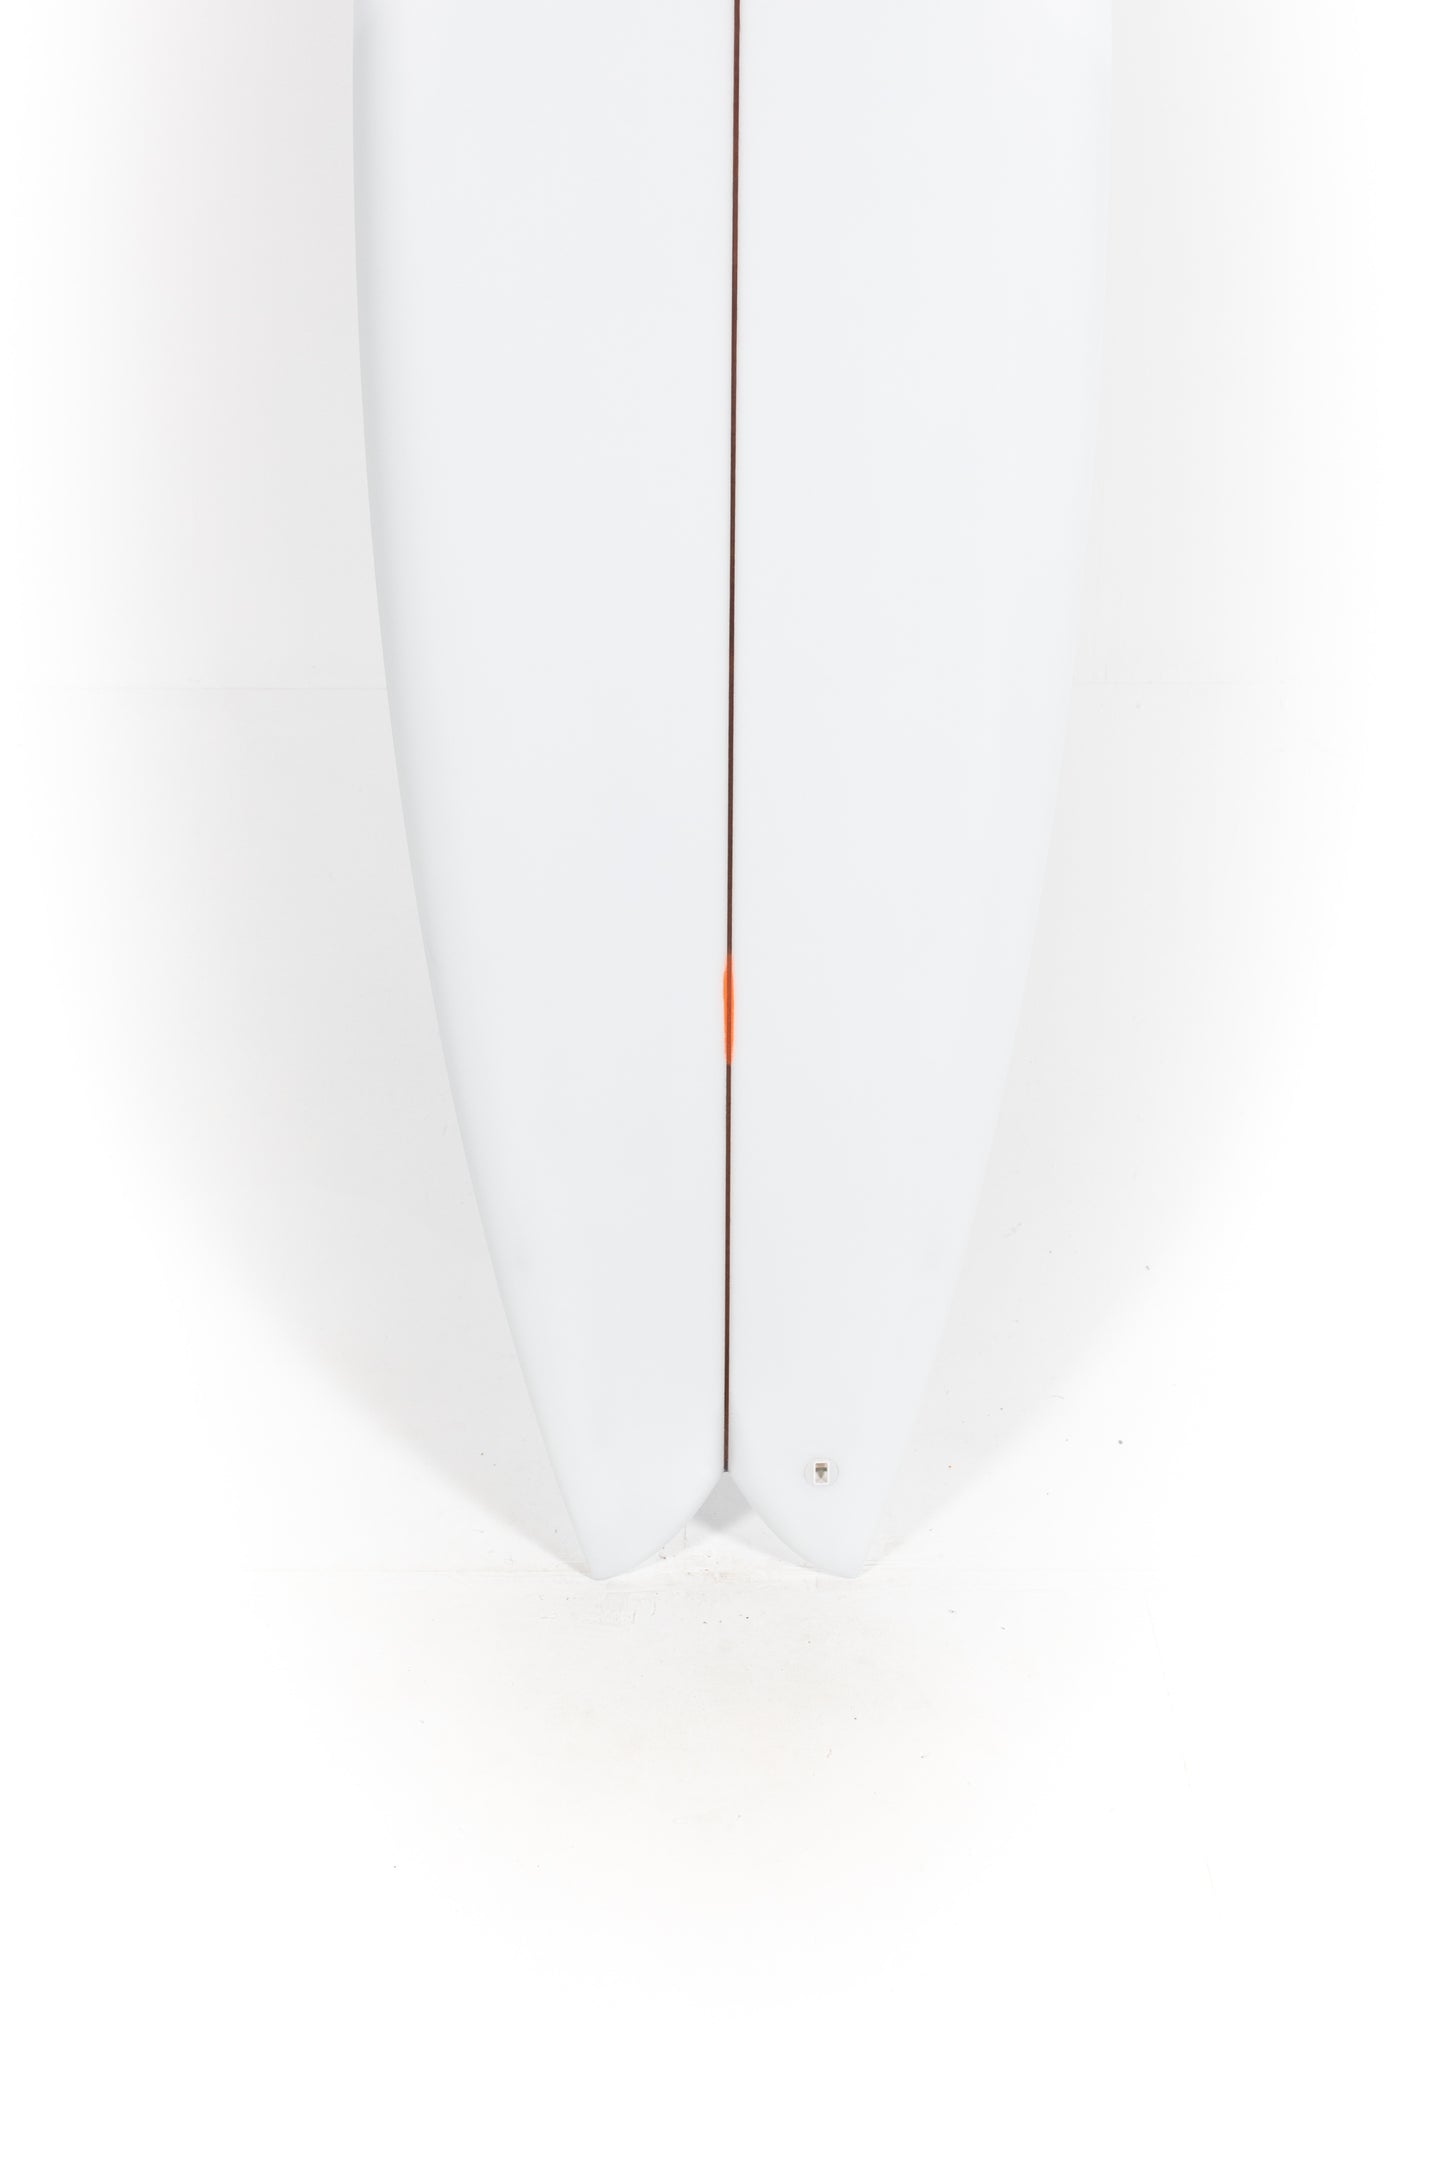 
                  
                    Christenson Surfboards - NAUTILUS - 6'2" x 20 1/4 x 2 1/2 - CX04680
                  
                